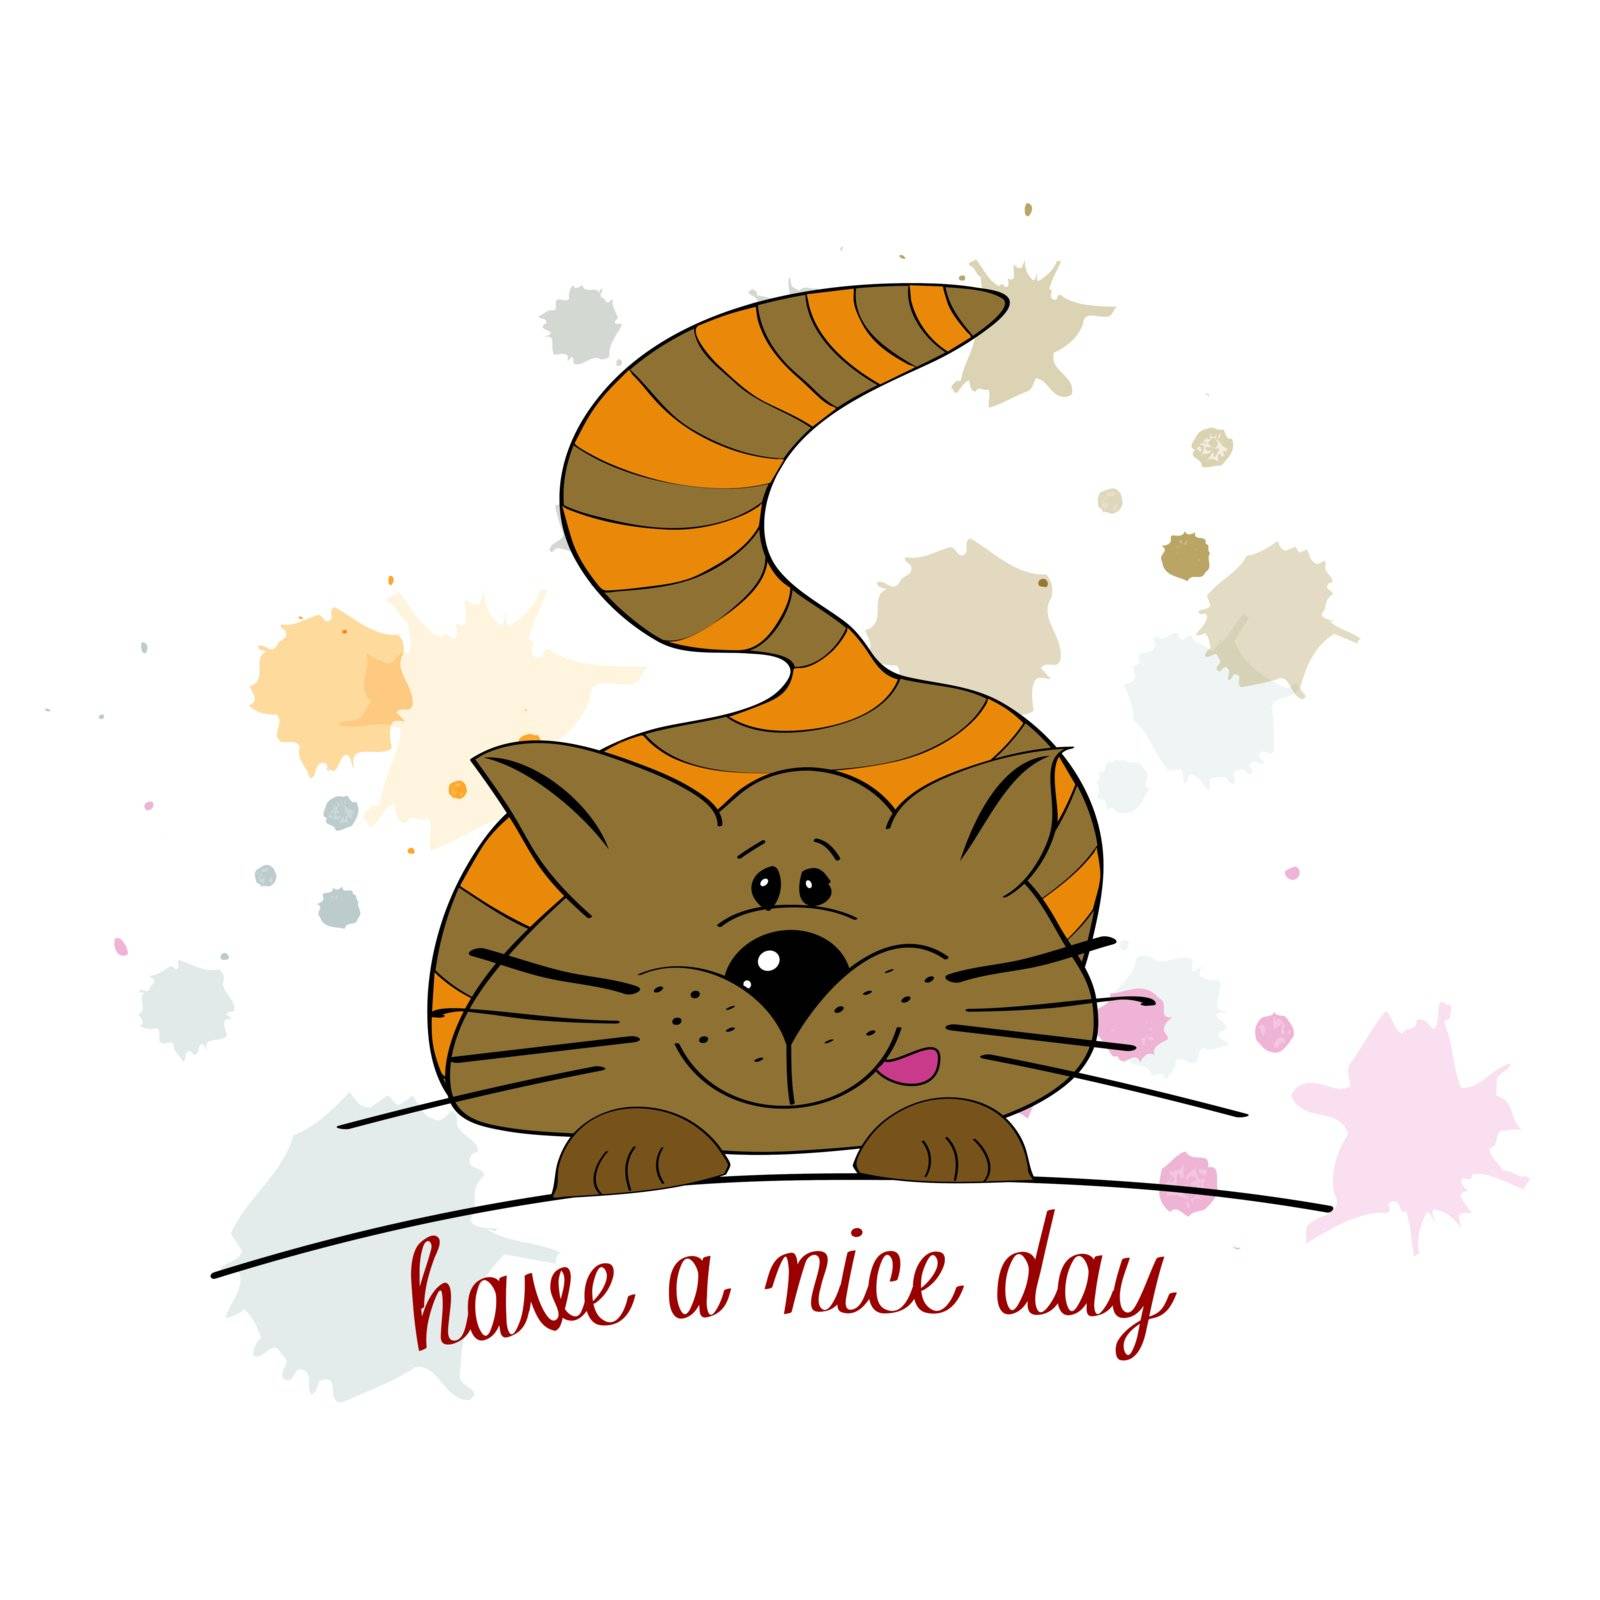  kitty wishes you a nice day by balasoiu